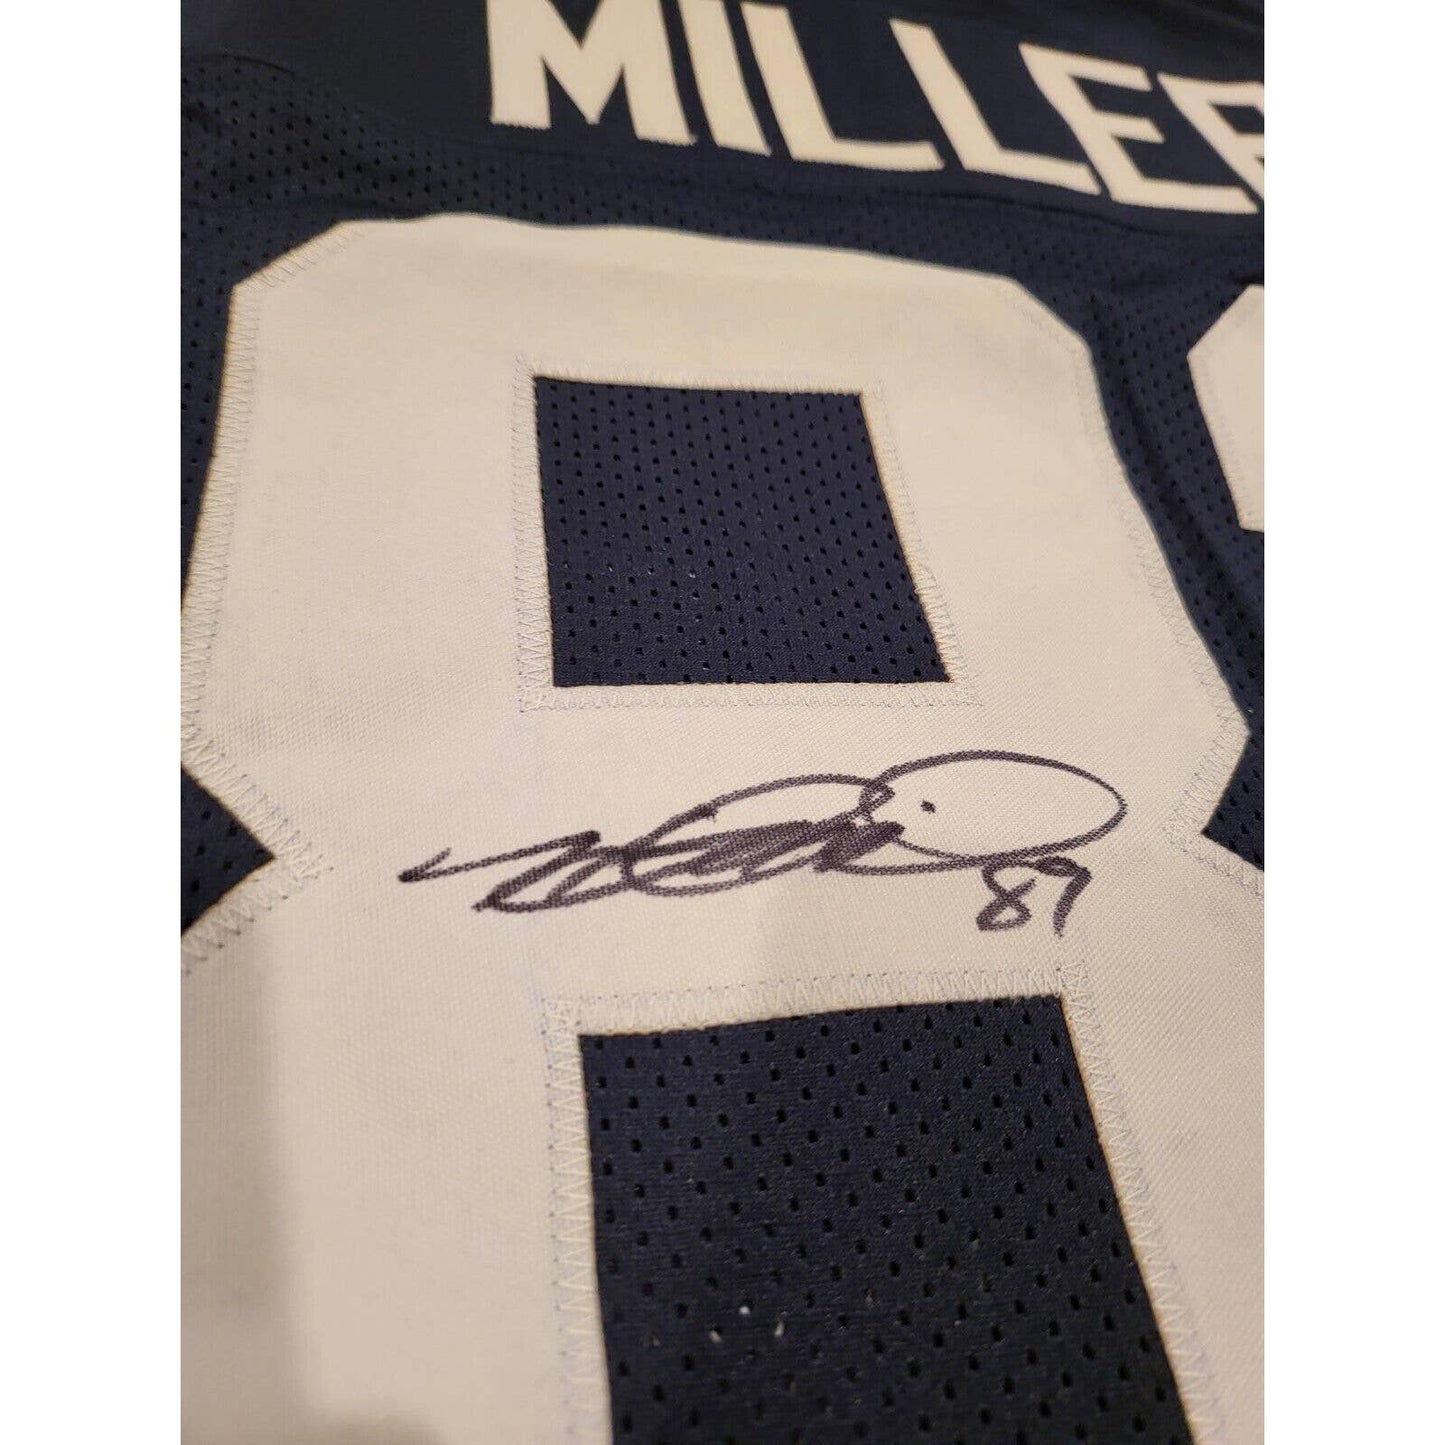 Heath Miller Autographed/Signed Jersey TSE COA Virginia Cavaliers Steelers - TreasuresEvolved